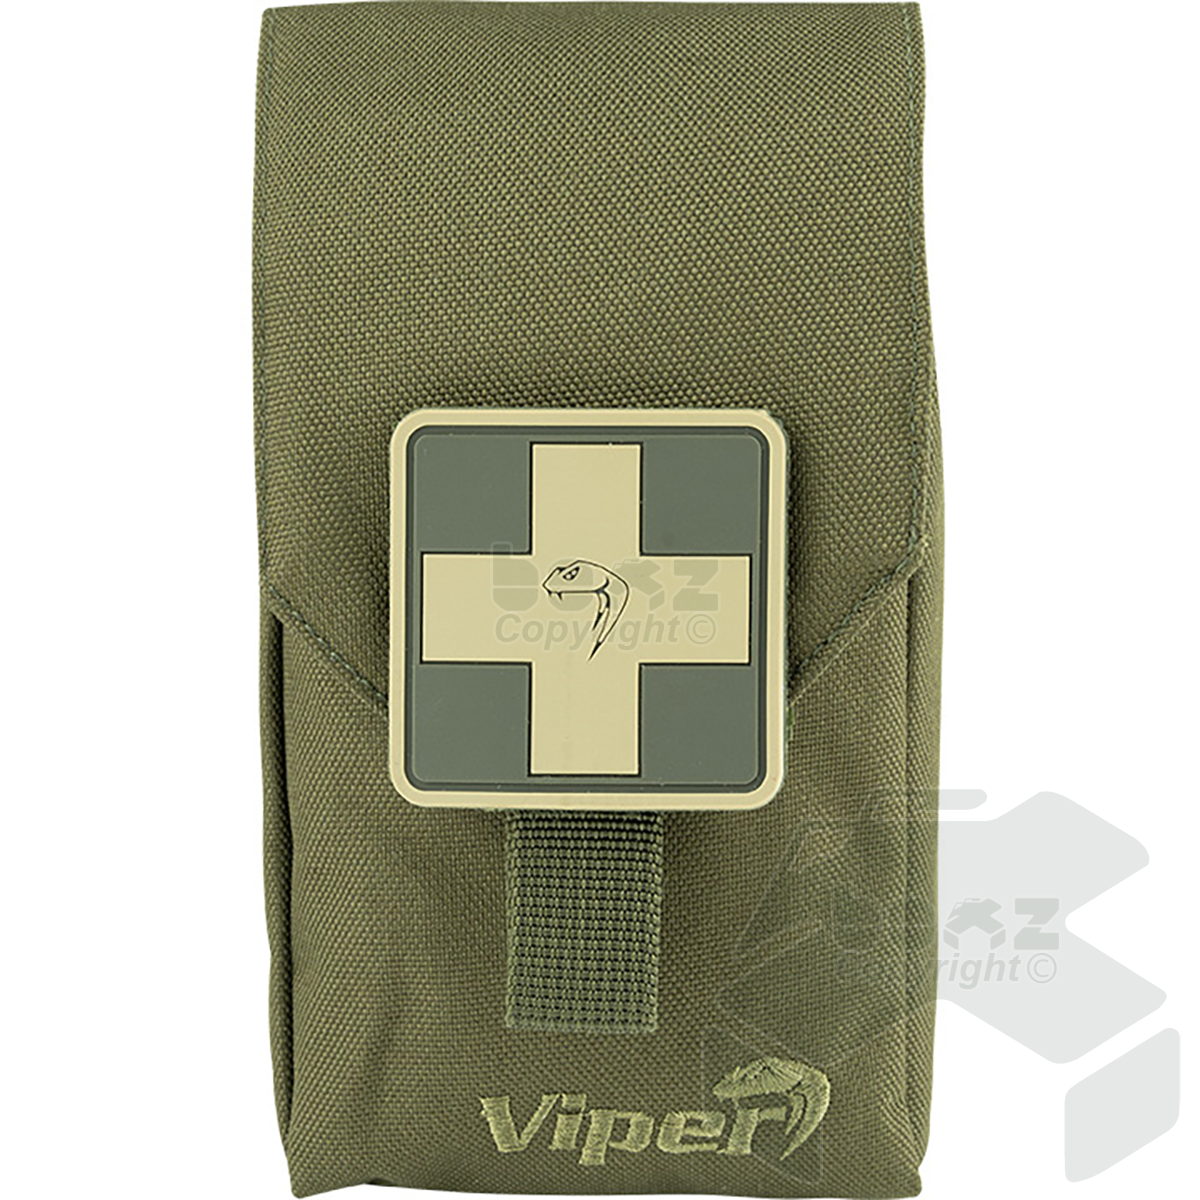 Viper First Aid Kit - Green